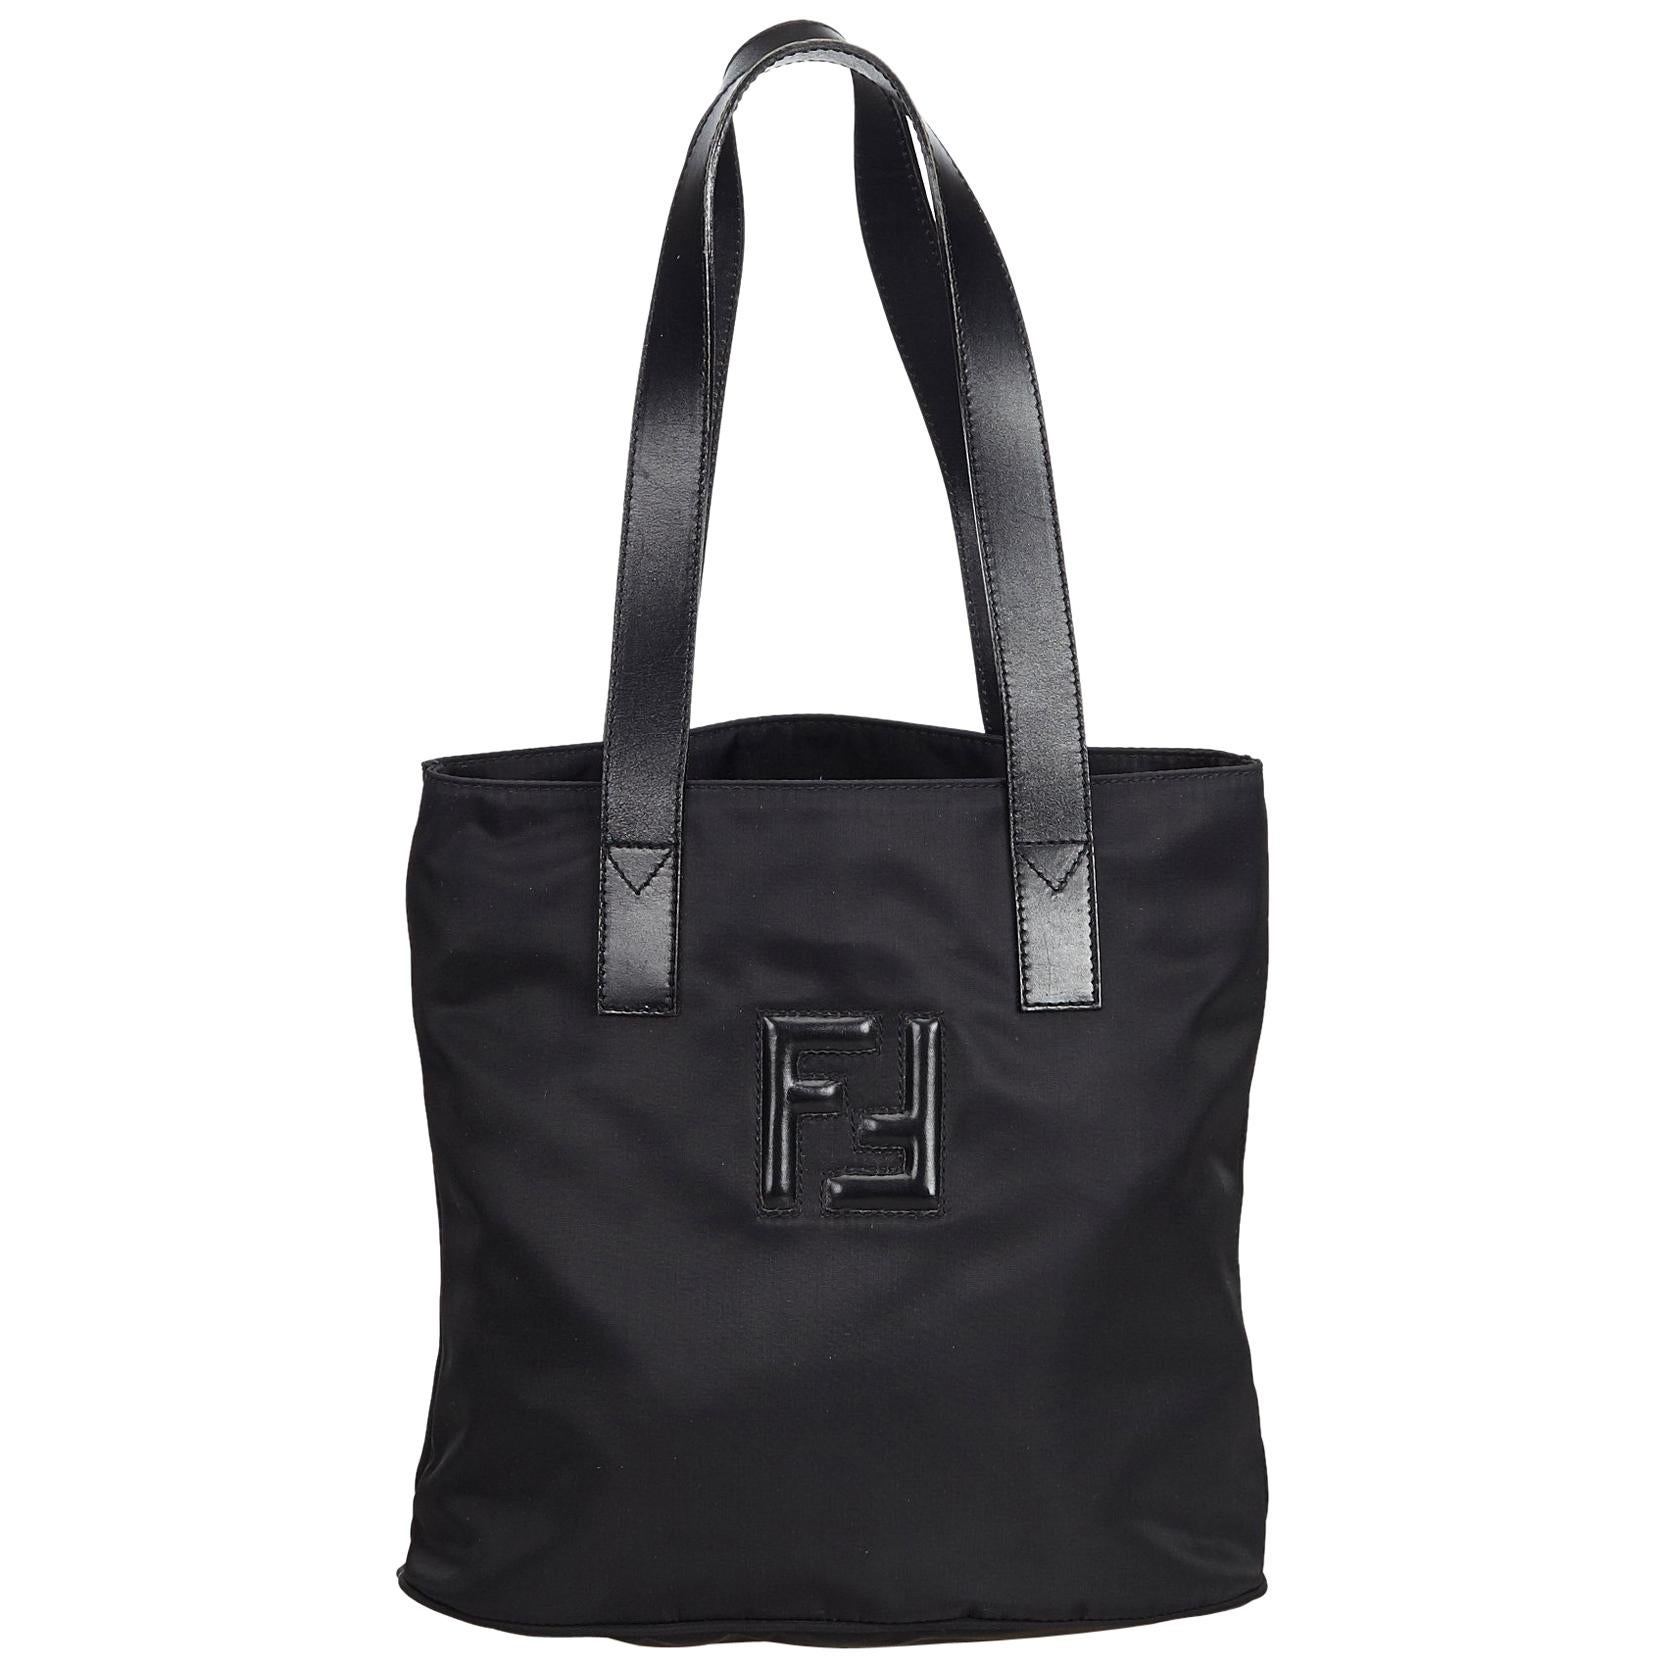 Fendi Black Nylon Tote Bag